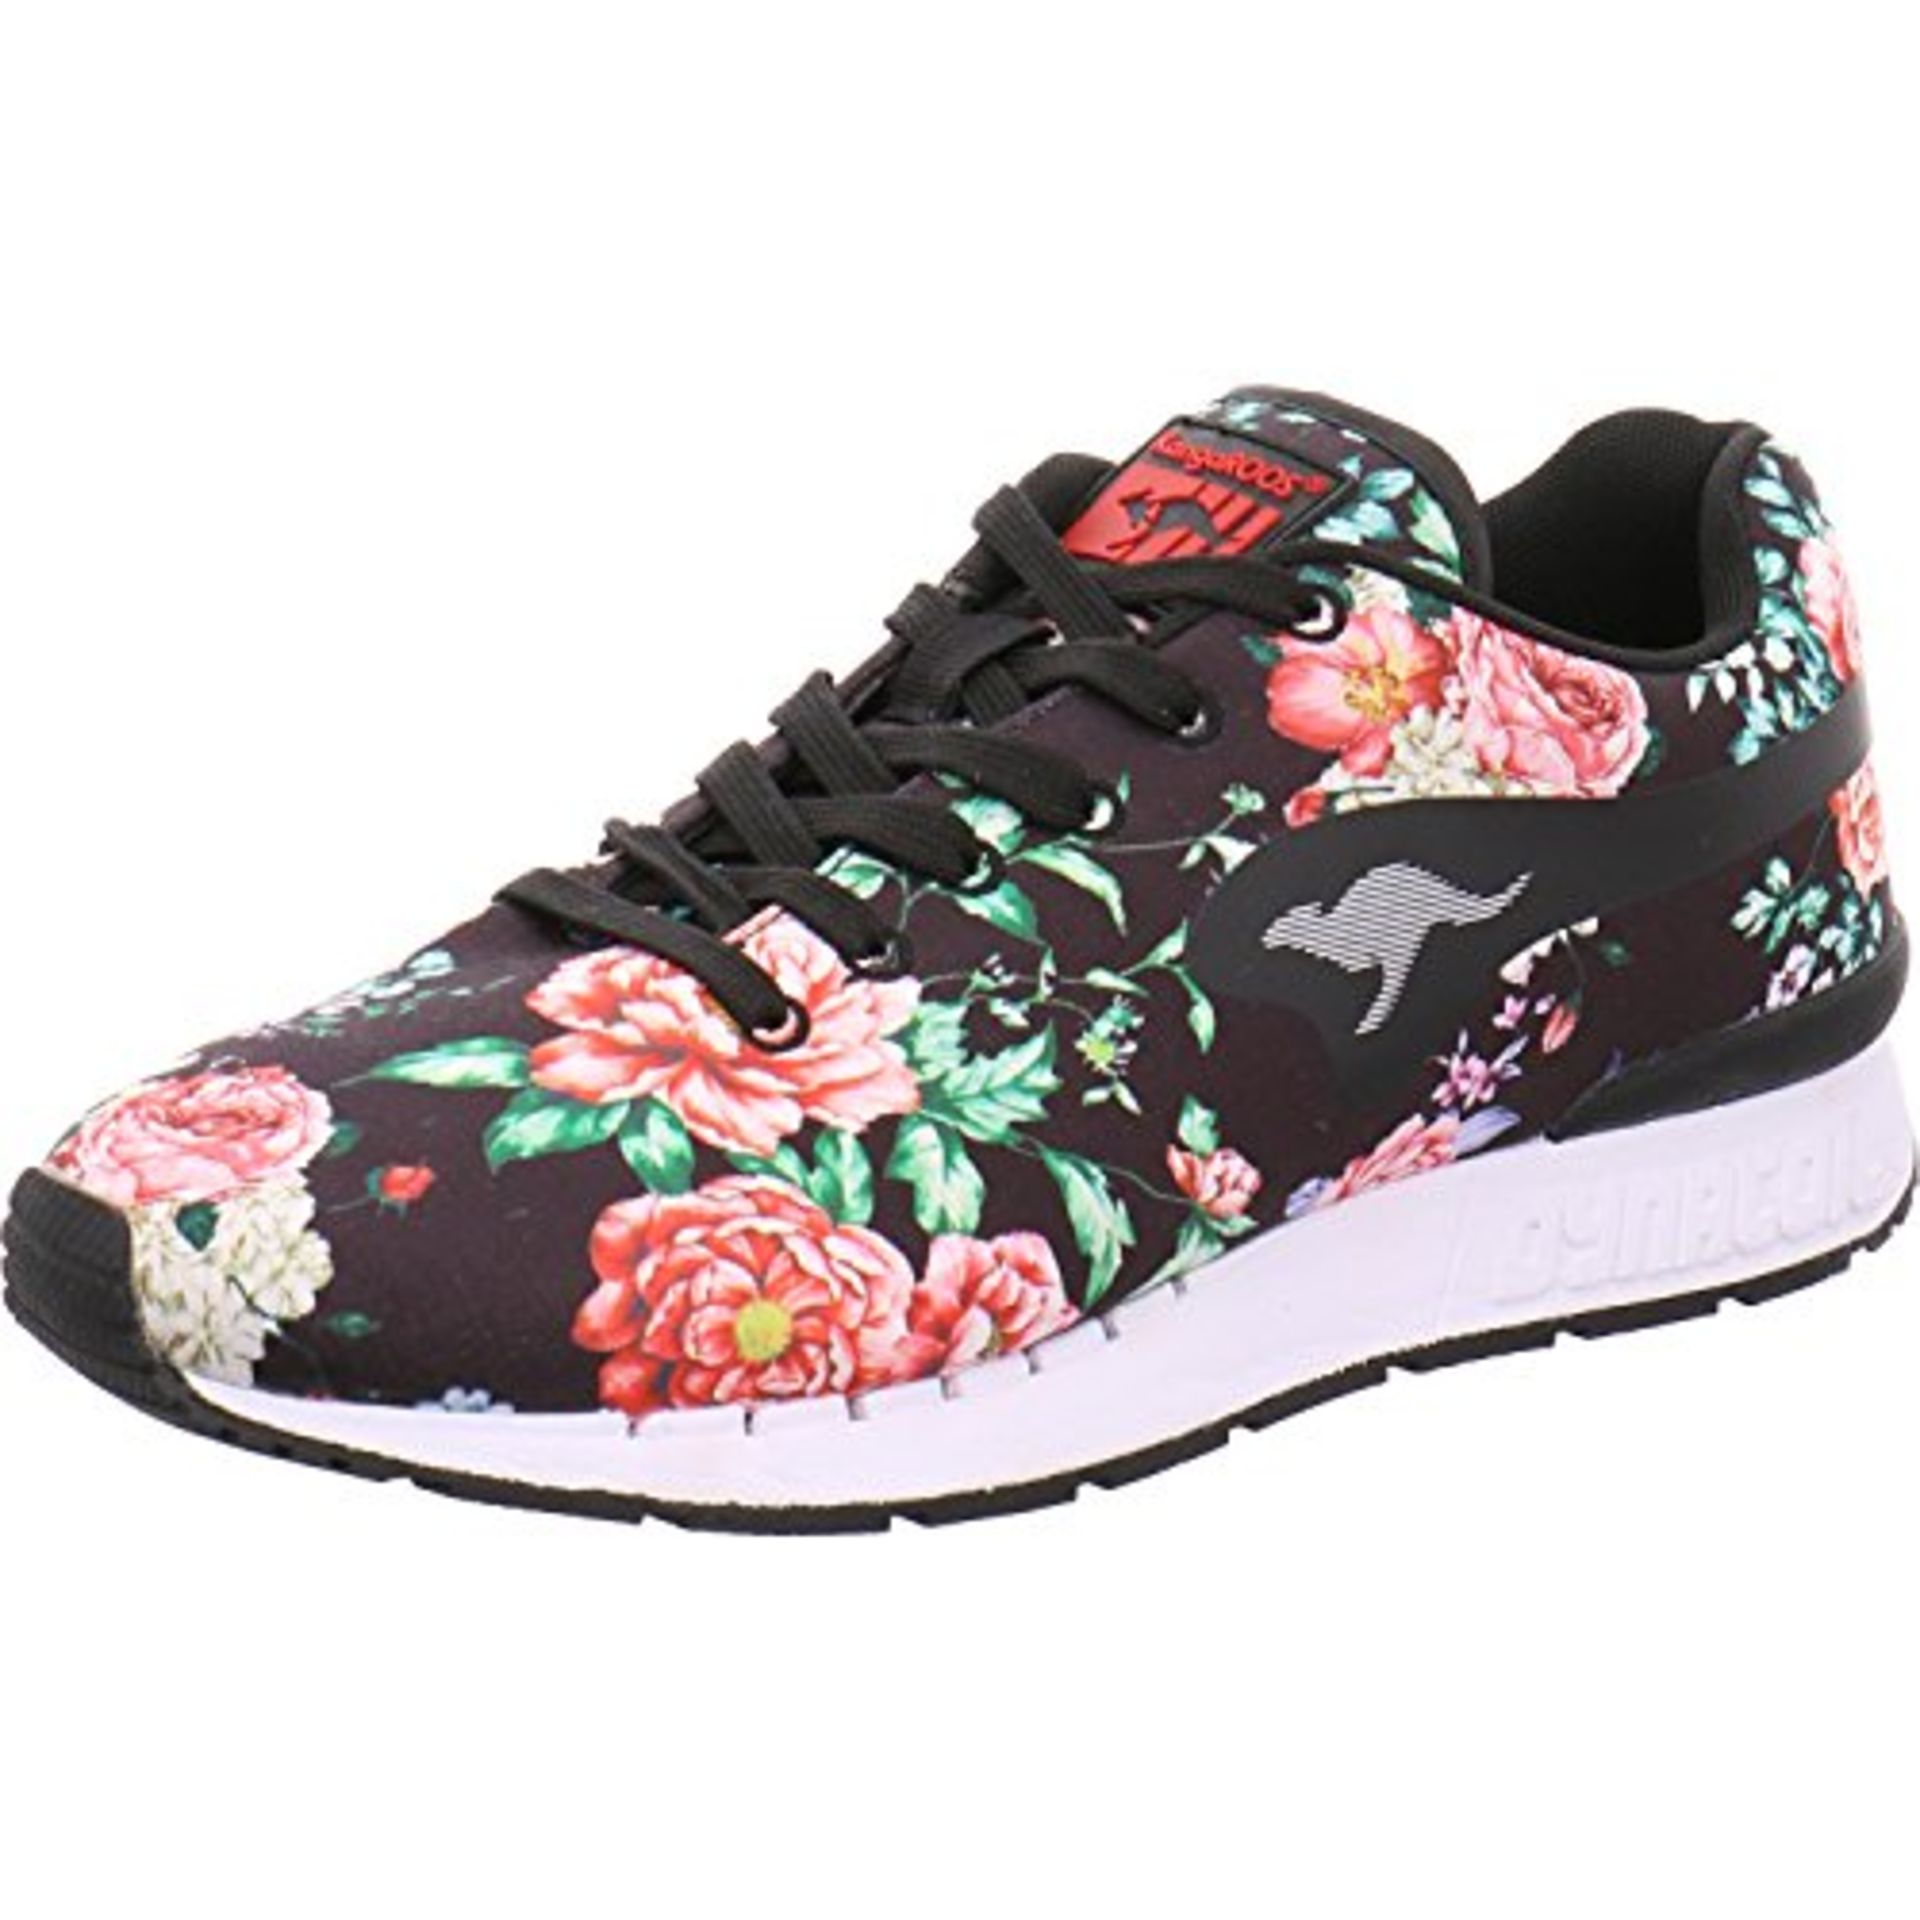 1 x KangaROOS Women’s Coil-r Flower Low-Top Sneakers Black Size: 3 UK Size: 3 UK | EAN: 4054264388